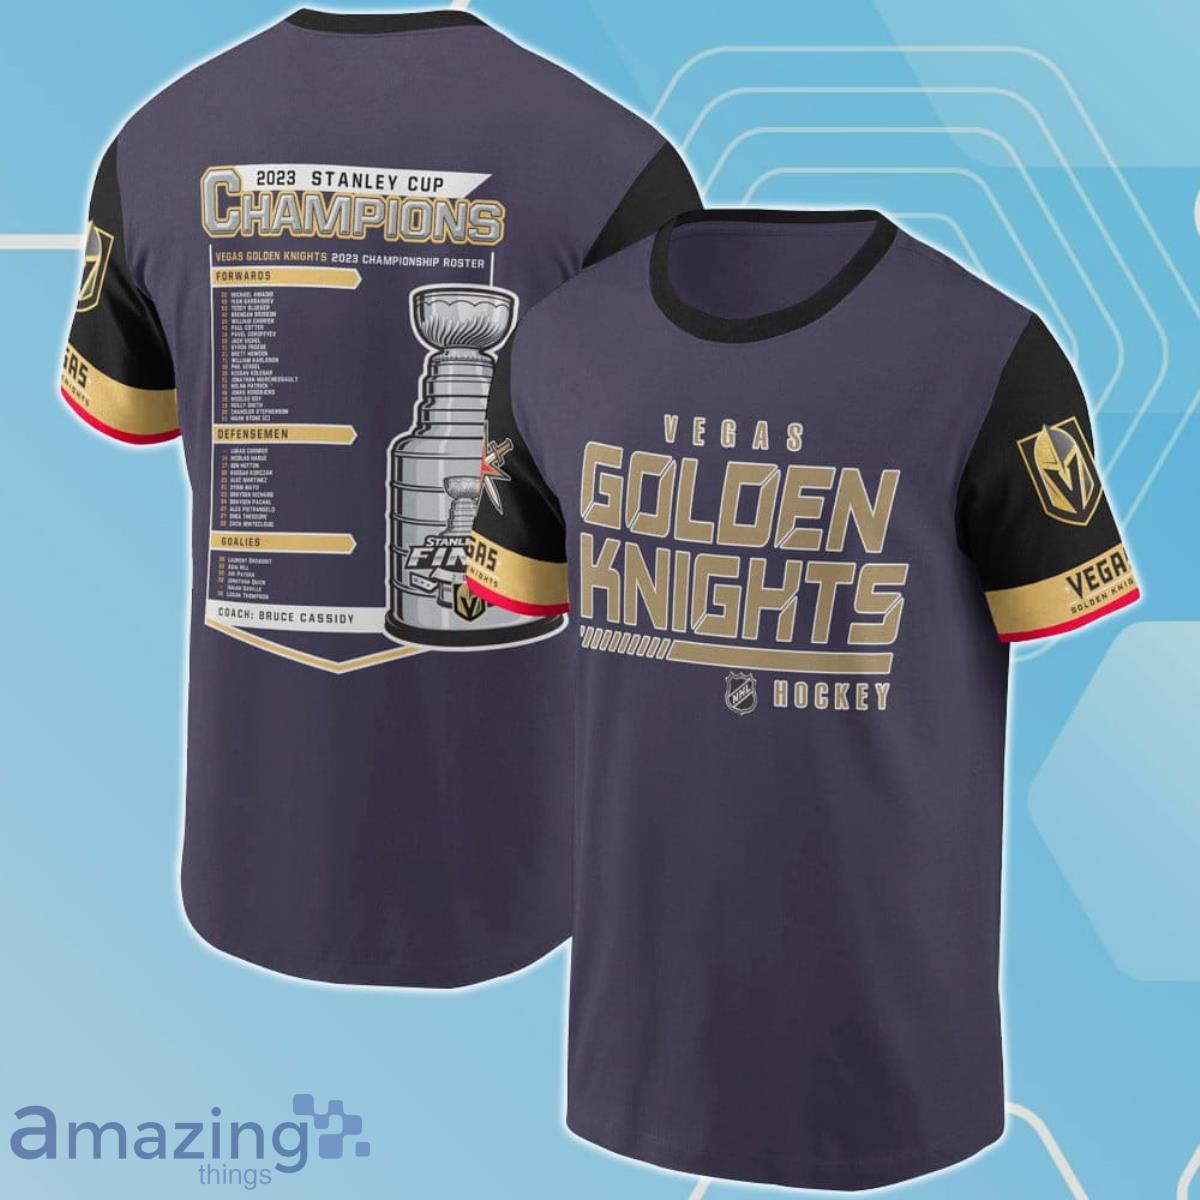 https://image.whatamazingthings.com/2023-06/vegas-golden-knights-national-hockey-league-2023-3d-shirt.jpg